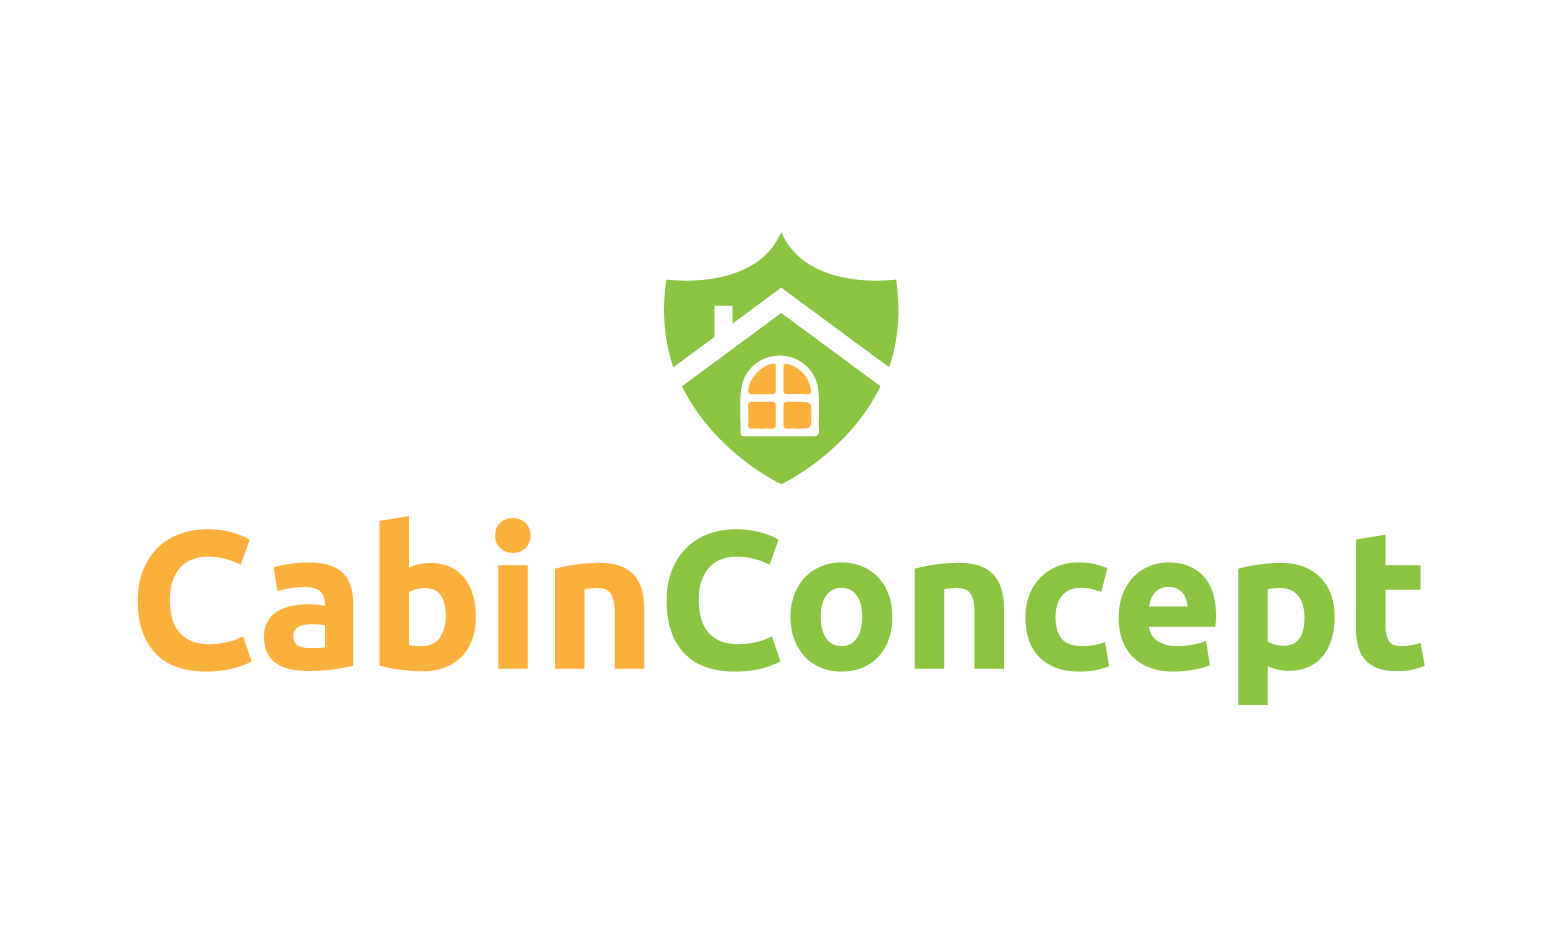 CabinConcept.com - Creative brandable domain for sale